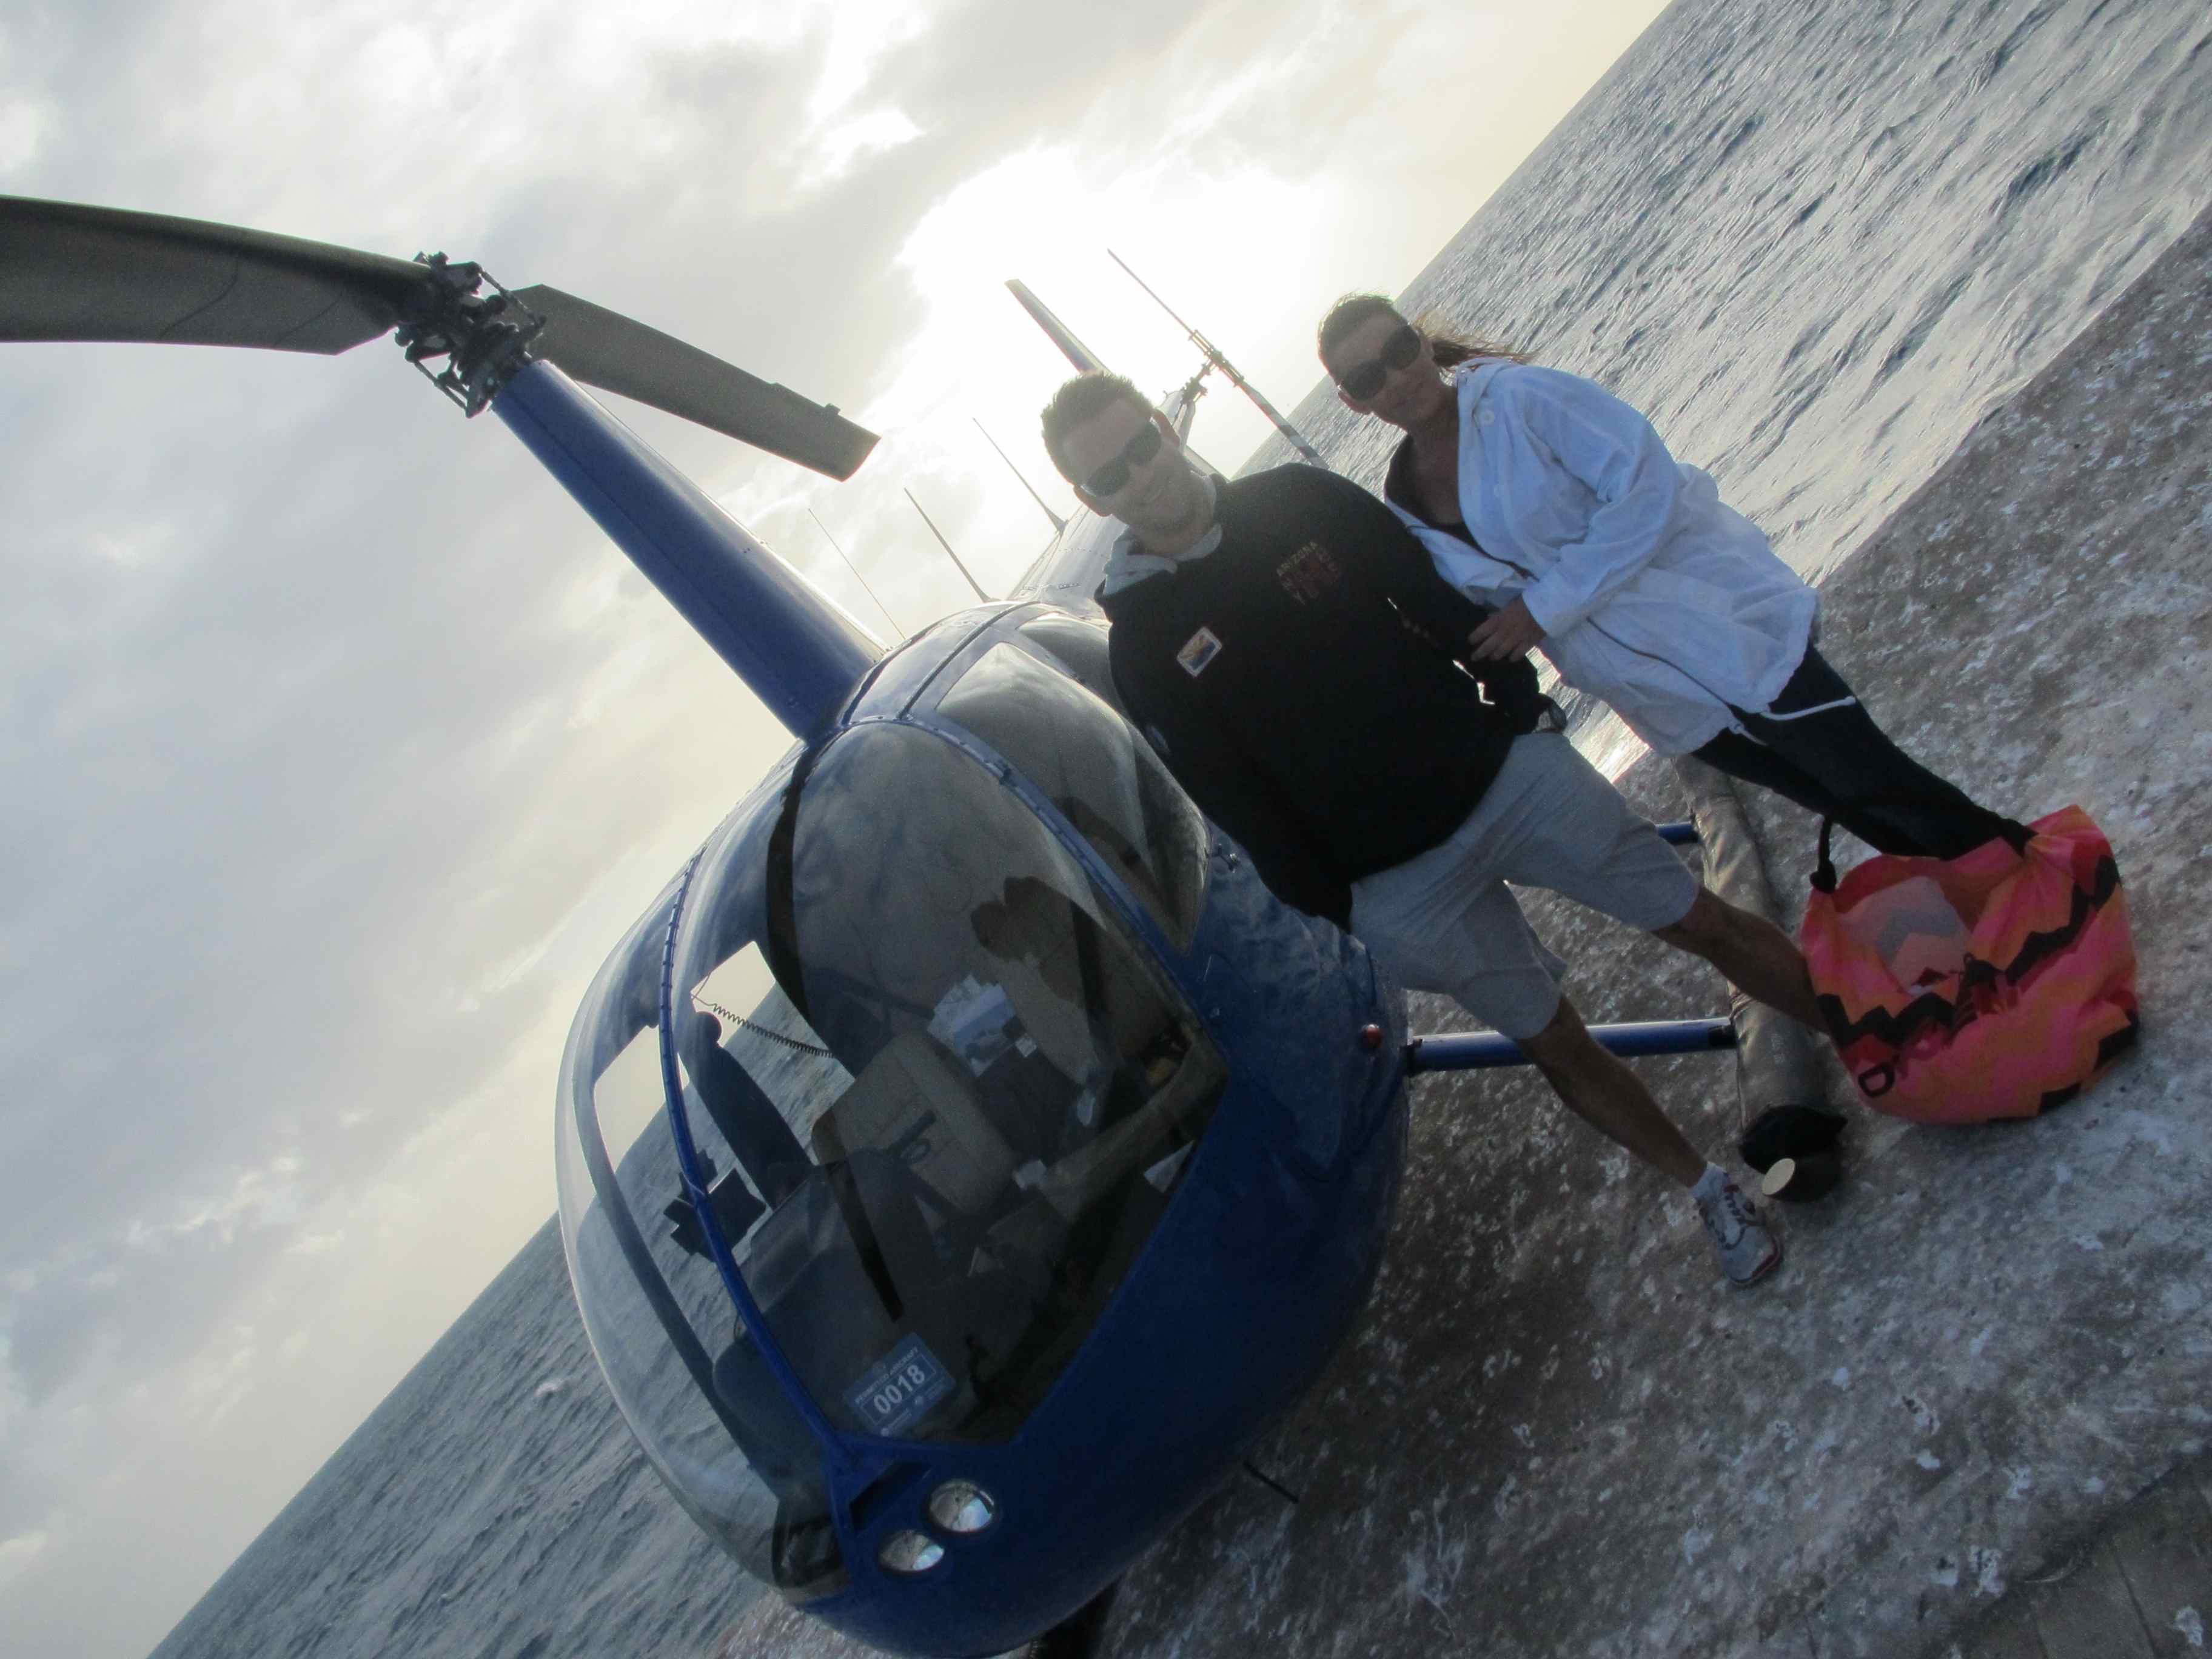 Chopper trip to Great Barrier